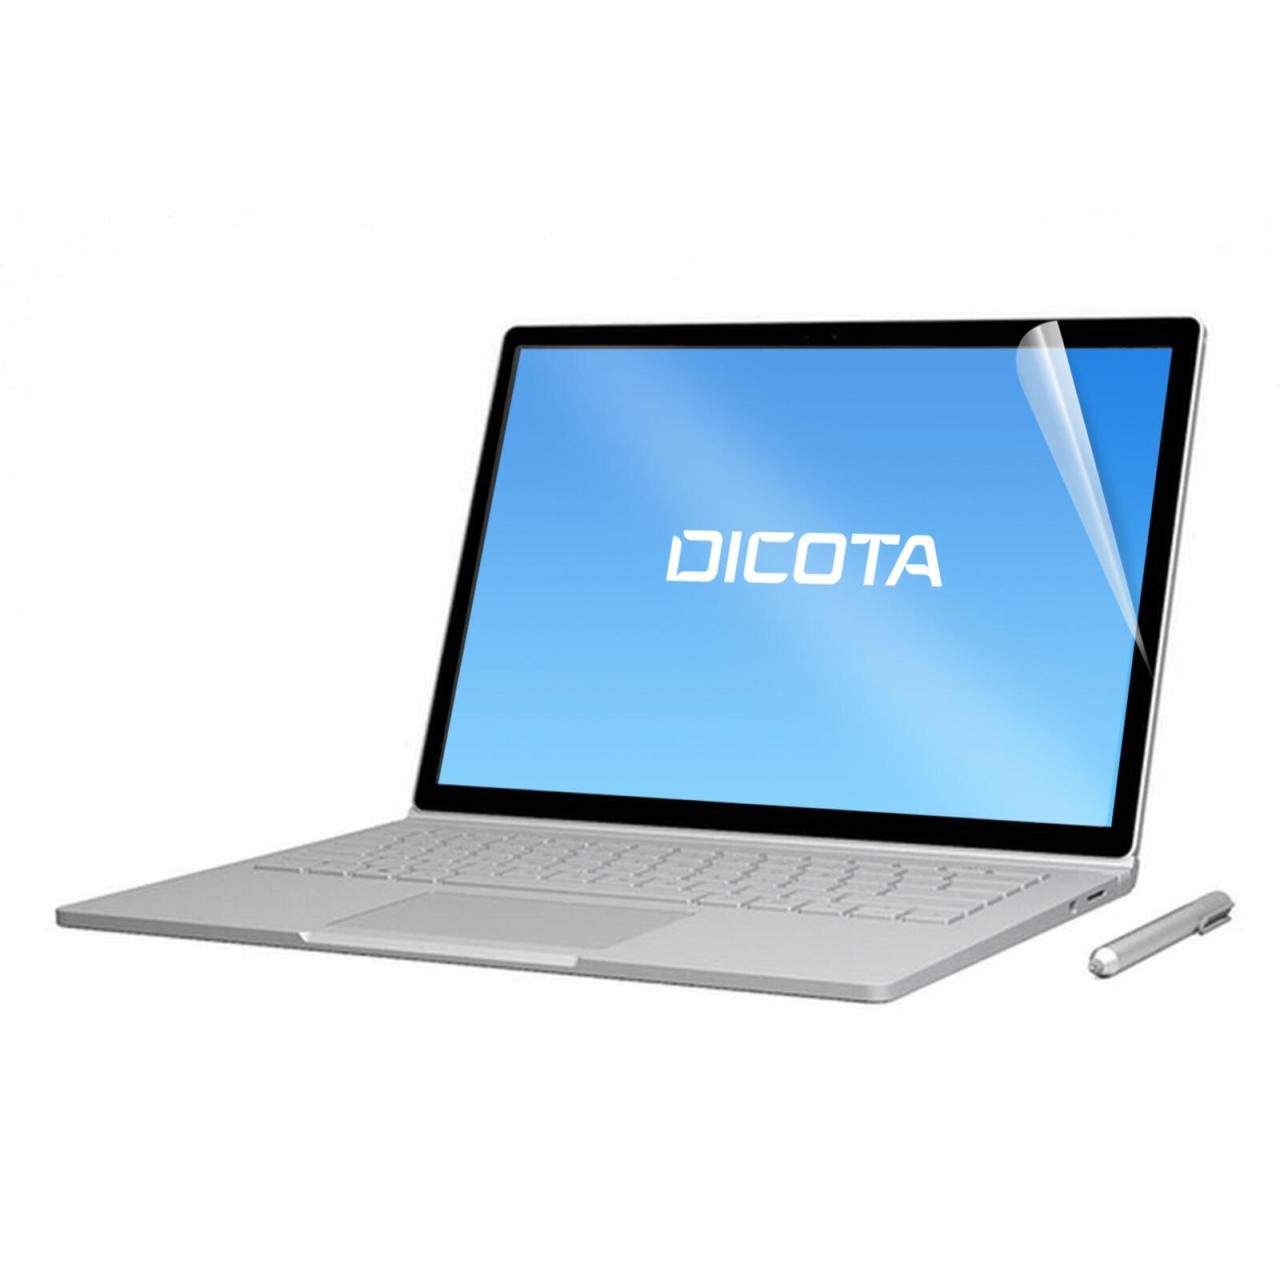 DICOTA Blendschutzfilter für Microsoft Surface Book von Dicota